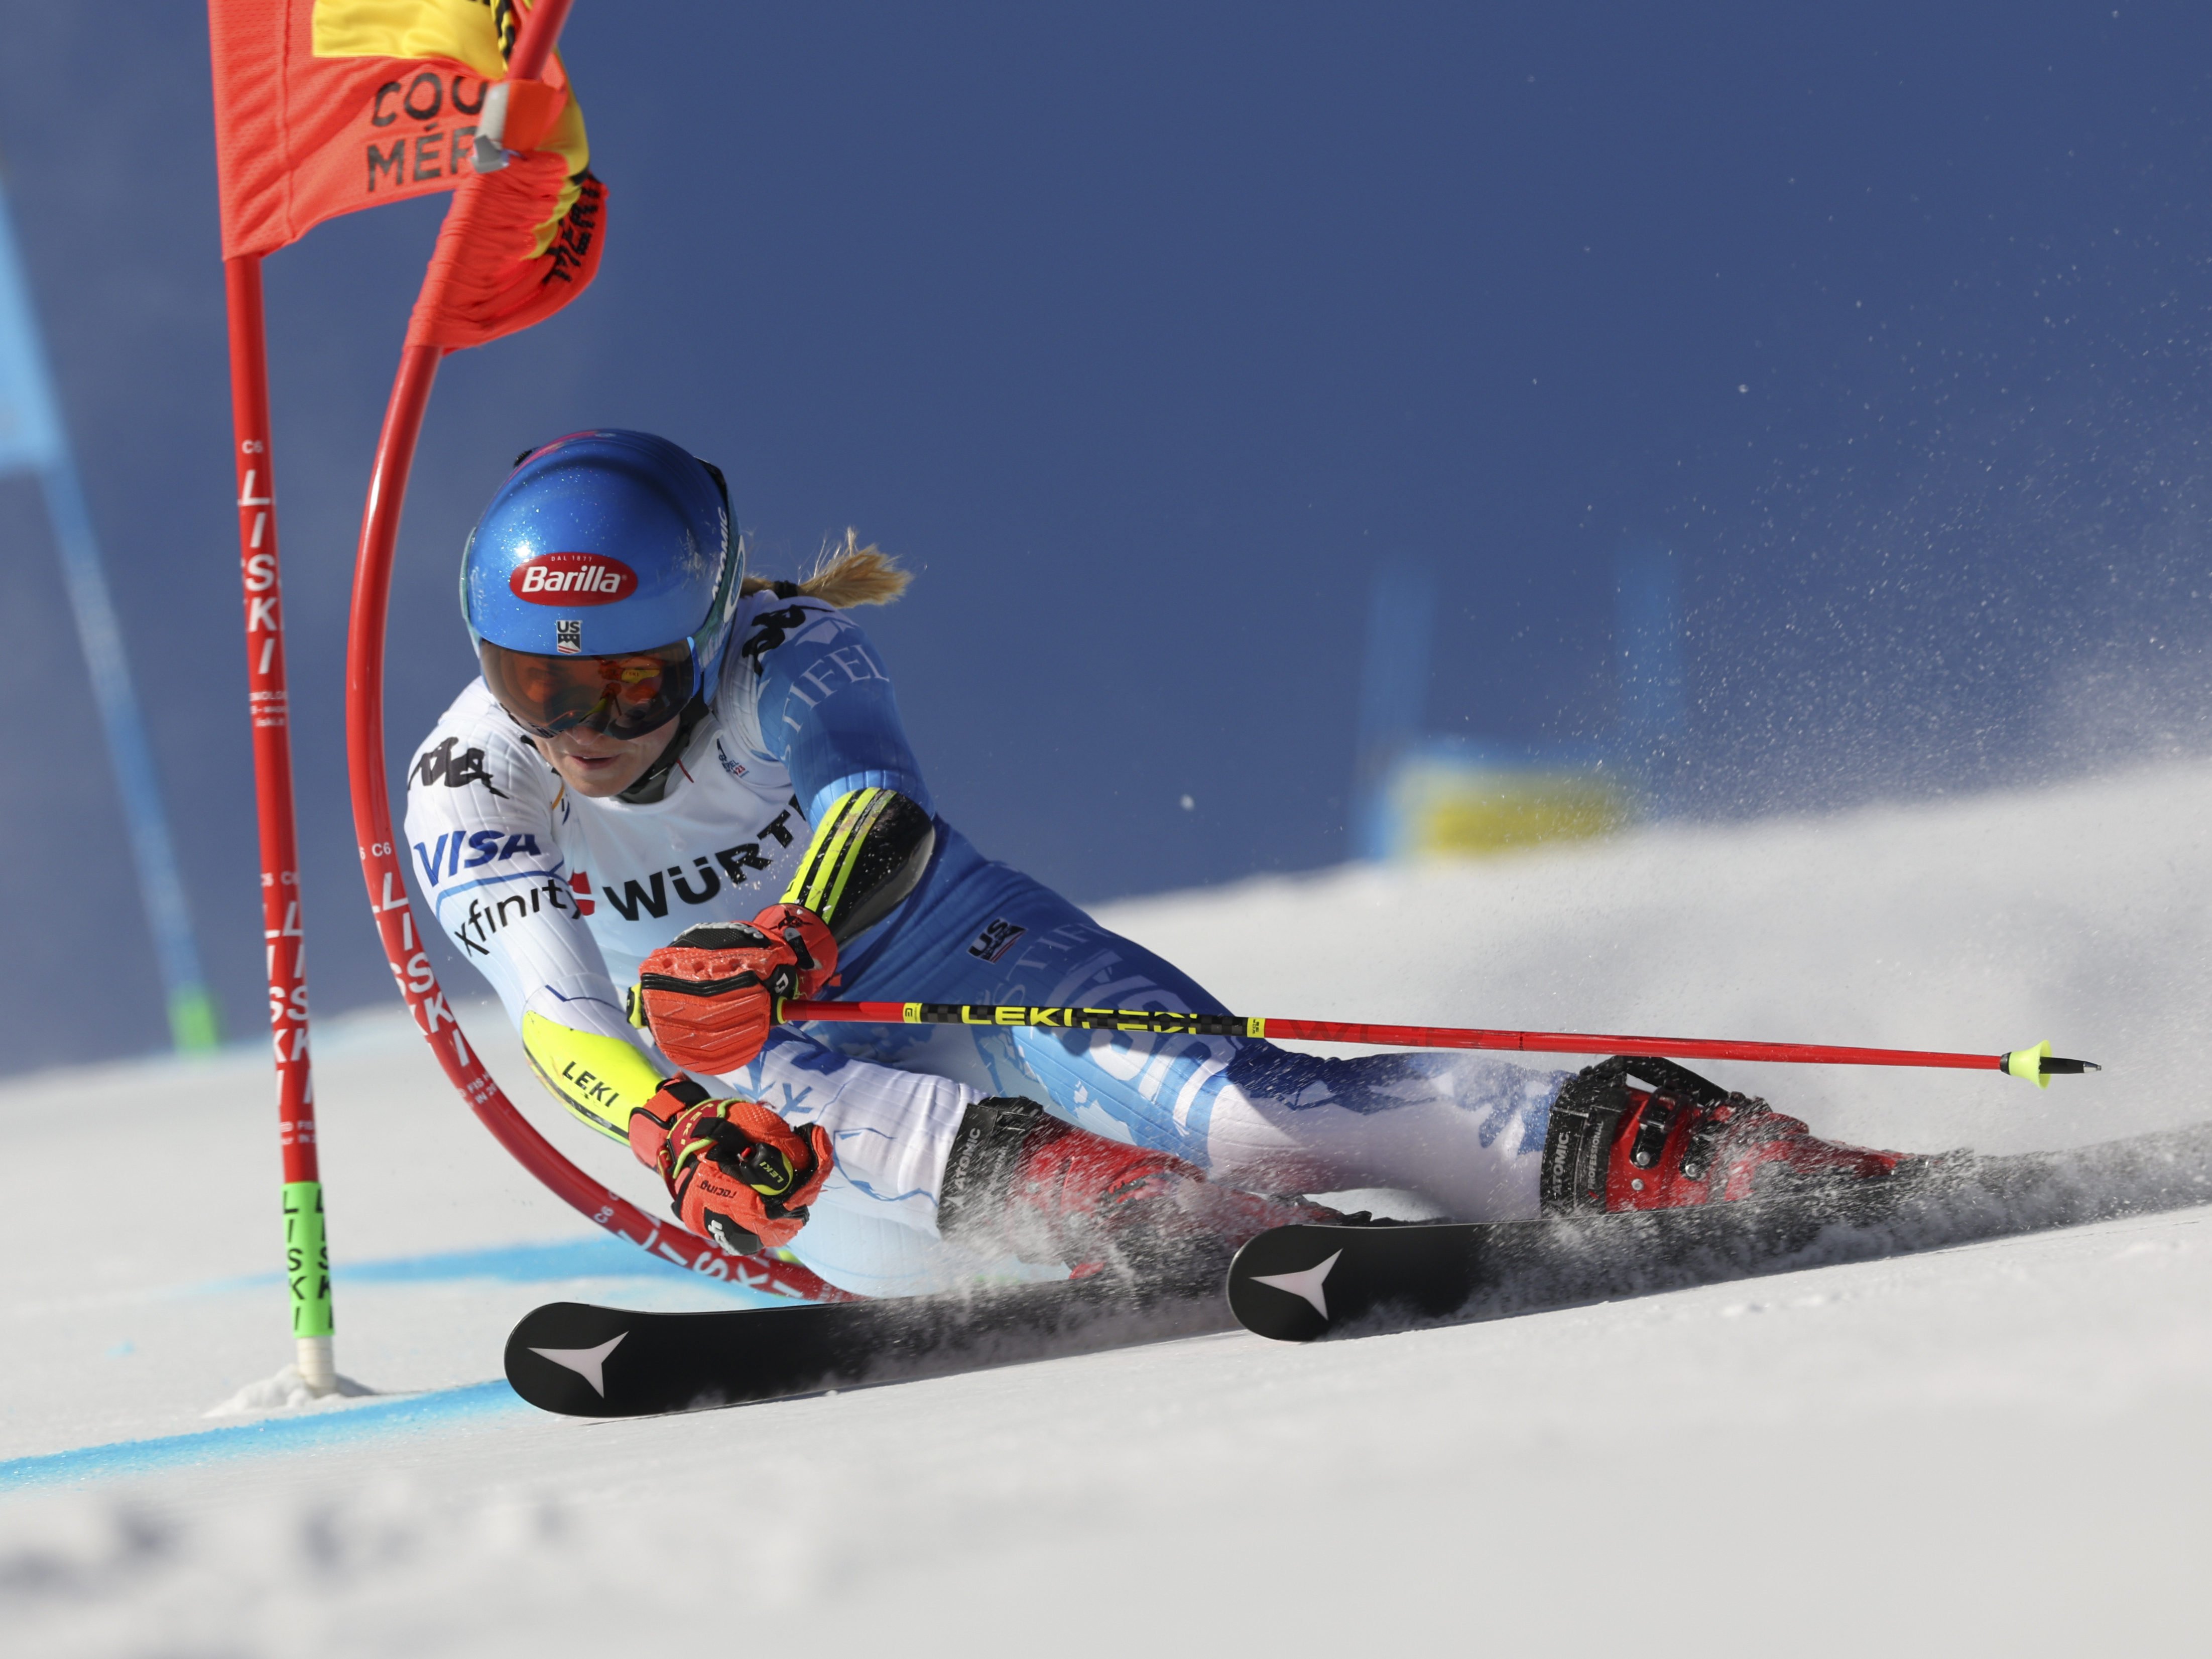 Mikaela Shiffrin wins gold in giant slalom at the world championships NPR